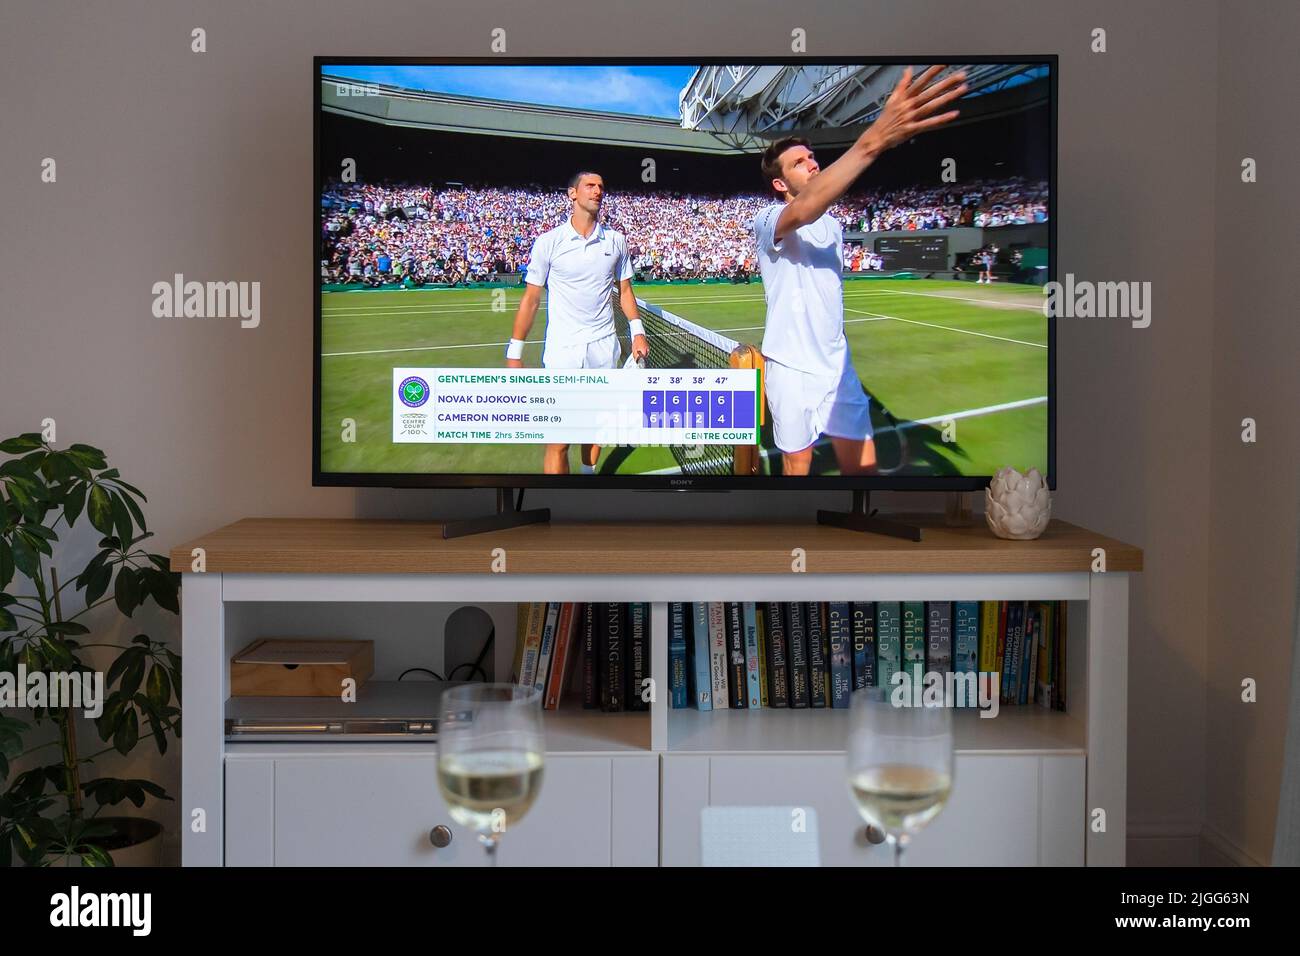 Cameron Norrie shakes the umpire's hand at Wimbledon 2022 men's singles semi final vs Novak Djokovic on 8th July 2022 on a flatscreen tv. UK Stock Photo